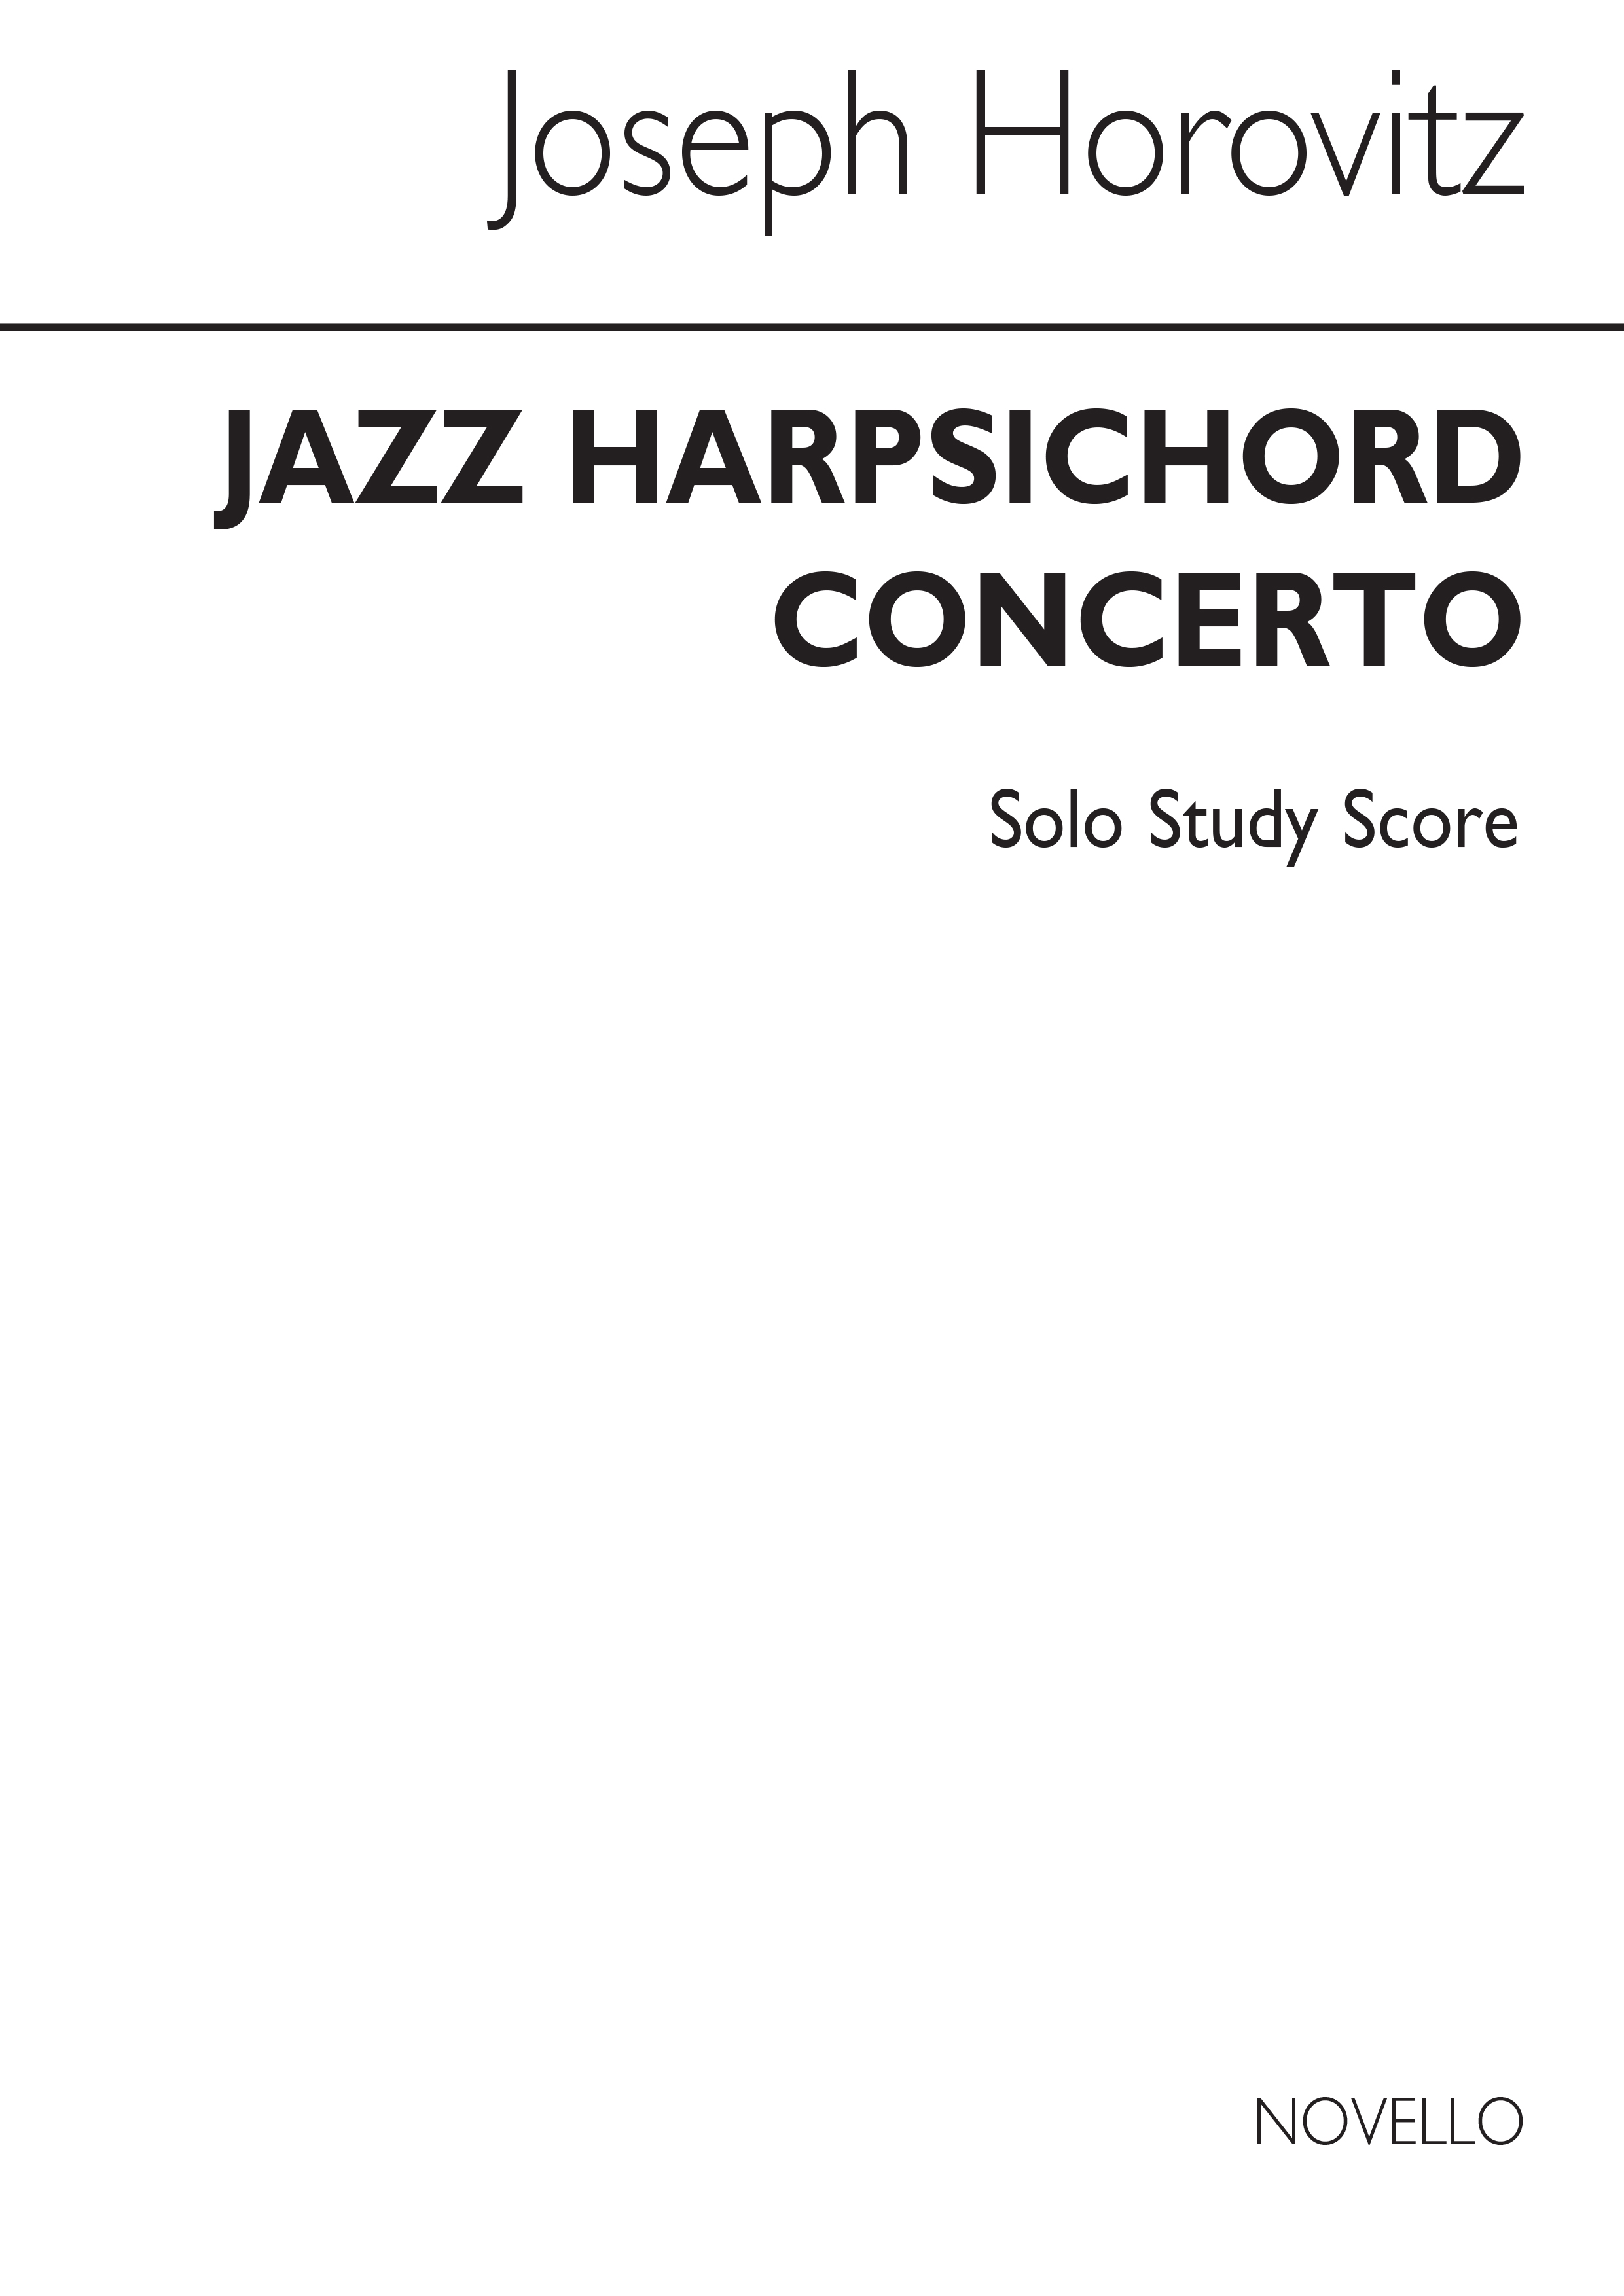 Horovitz: Jazz Concerto Solo Study Score